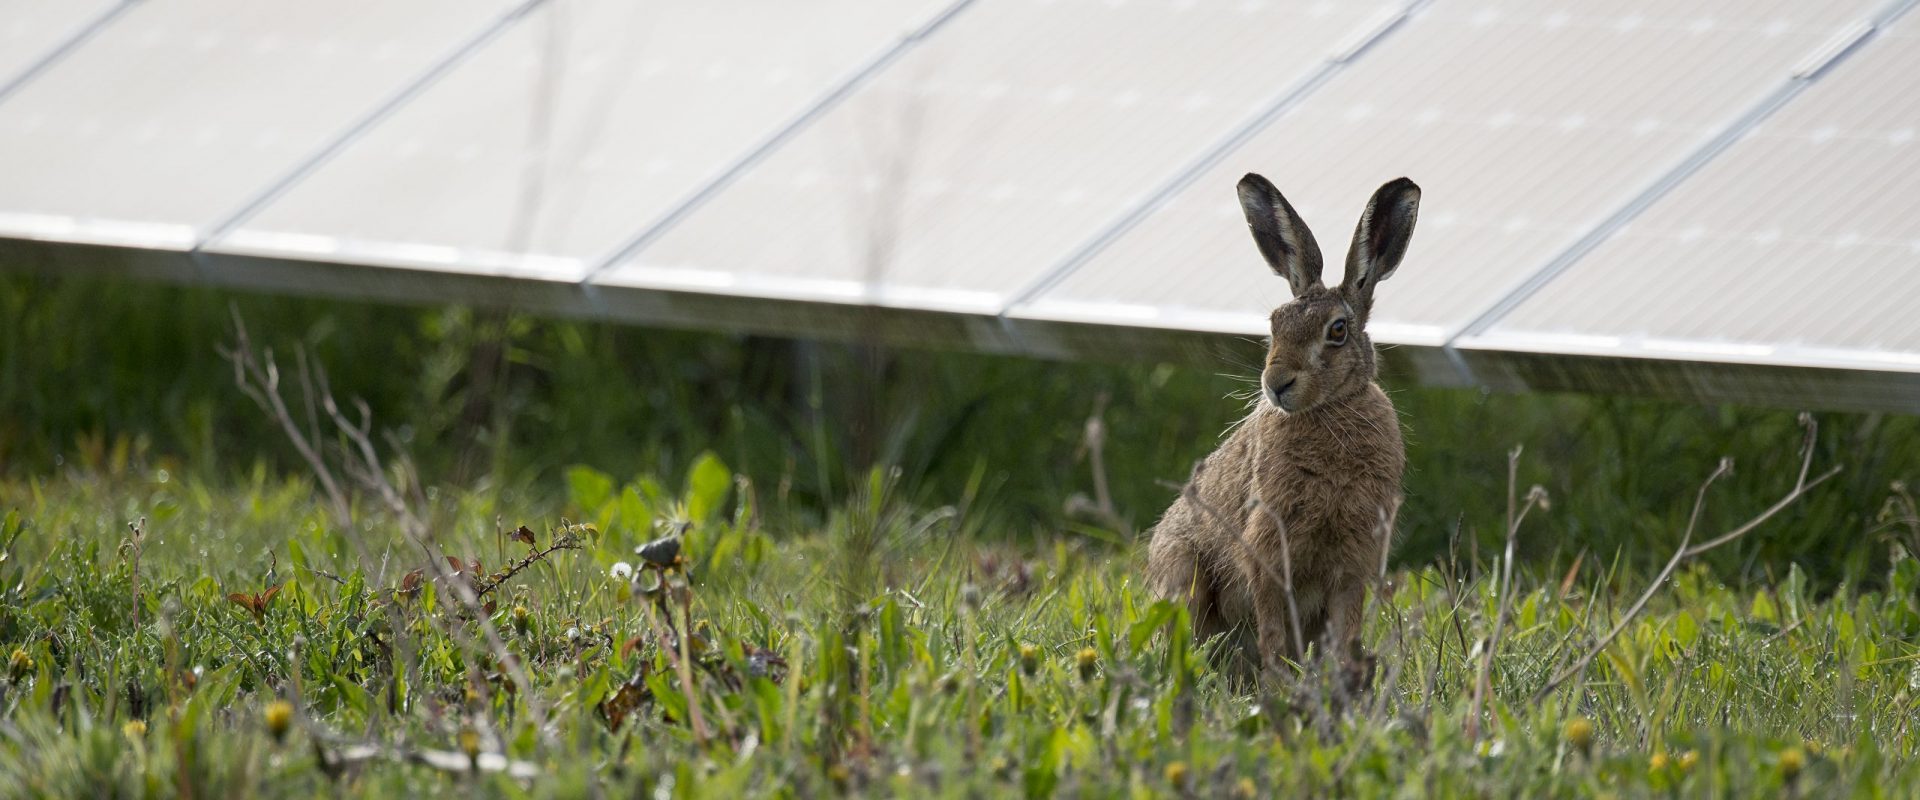 Rabbit in a solar farm